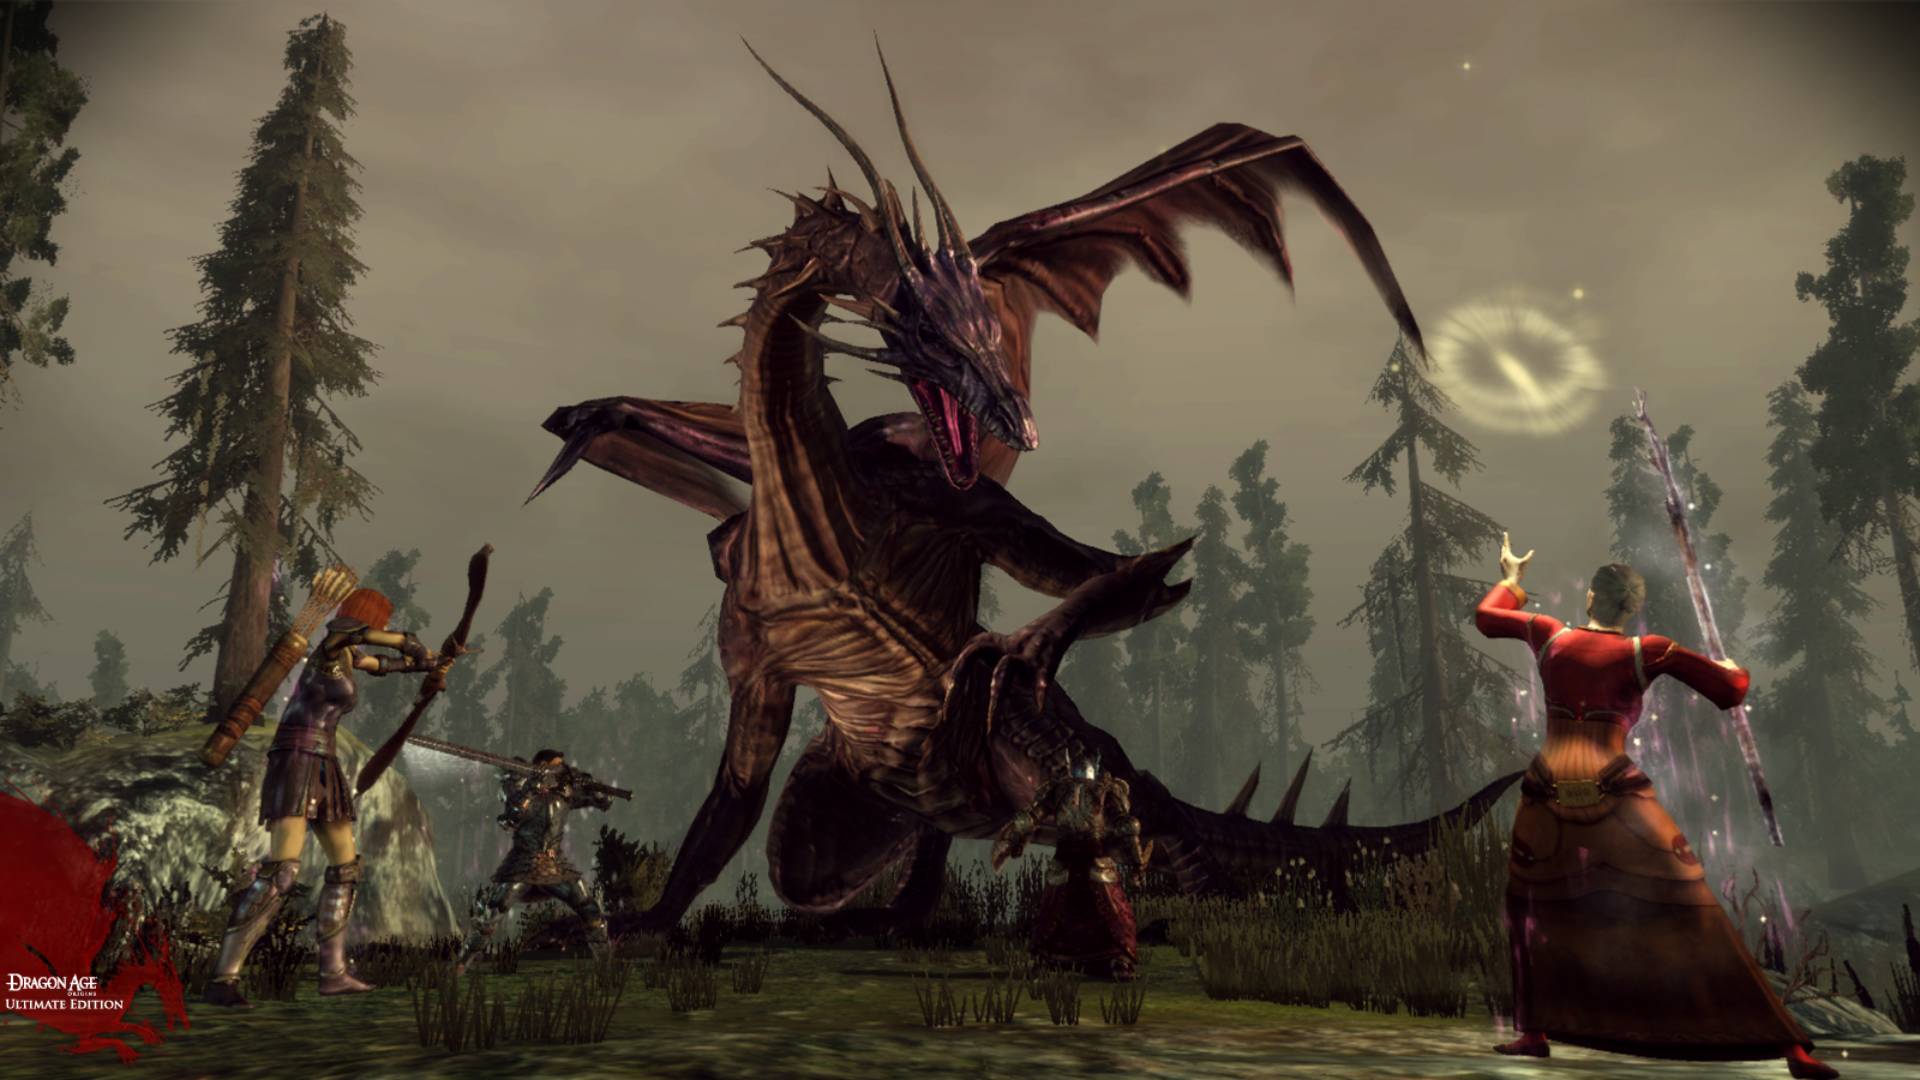 Personnages attaquant un dragon dans Dragon Age : Origins - Ultimate Edition.